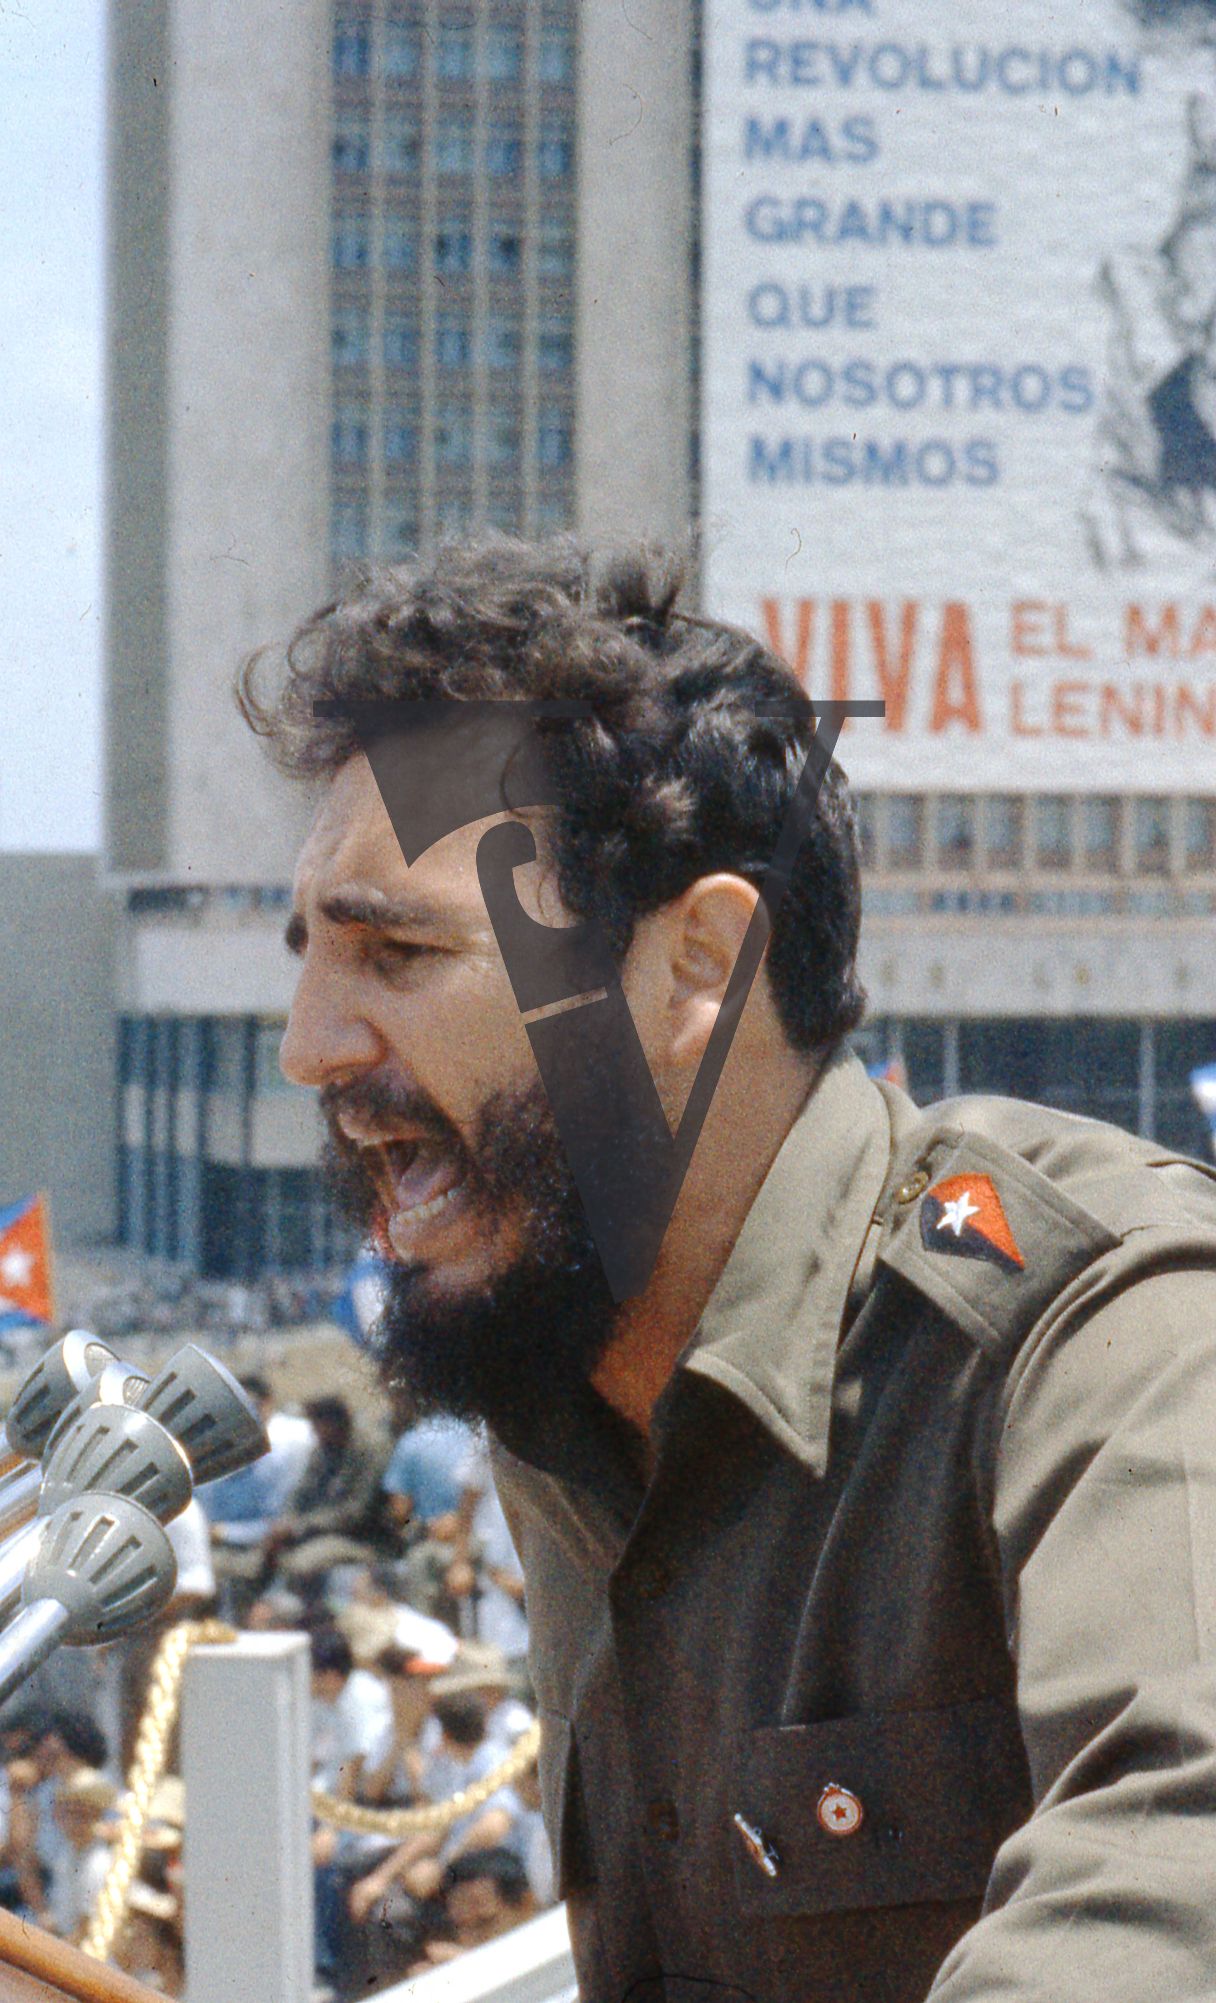 Cuba, Havana, Fidel Castro speech, close-up, shouting.